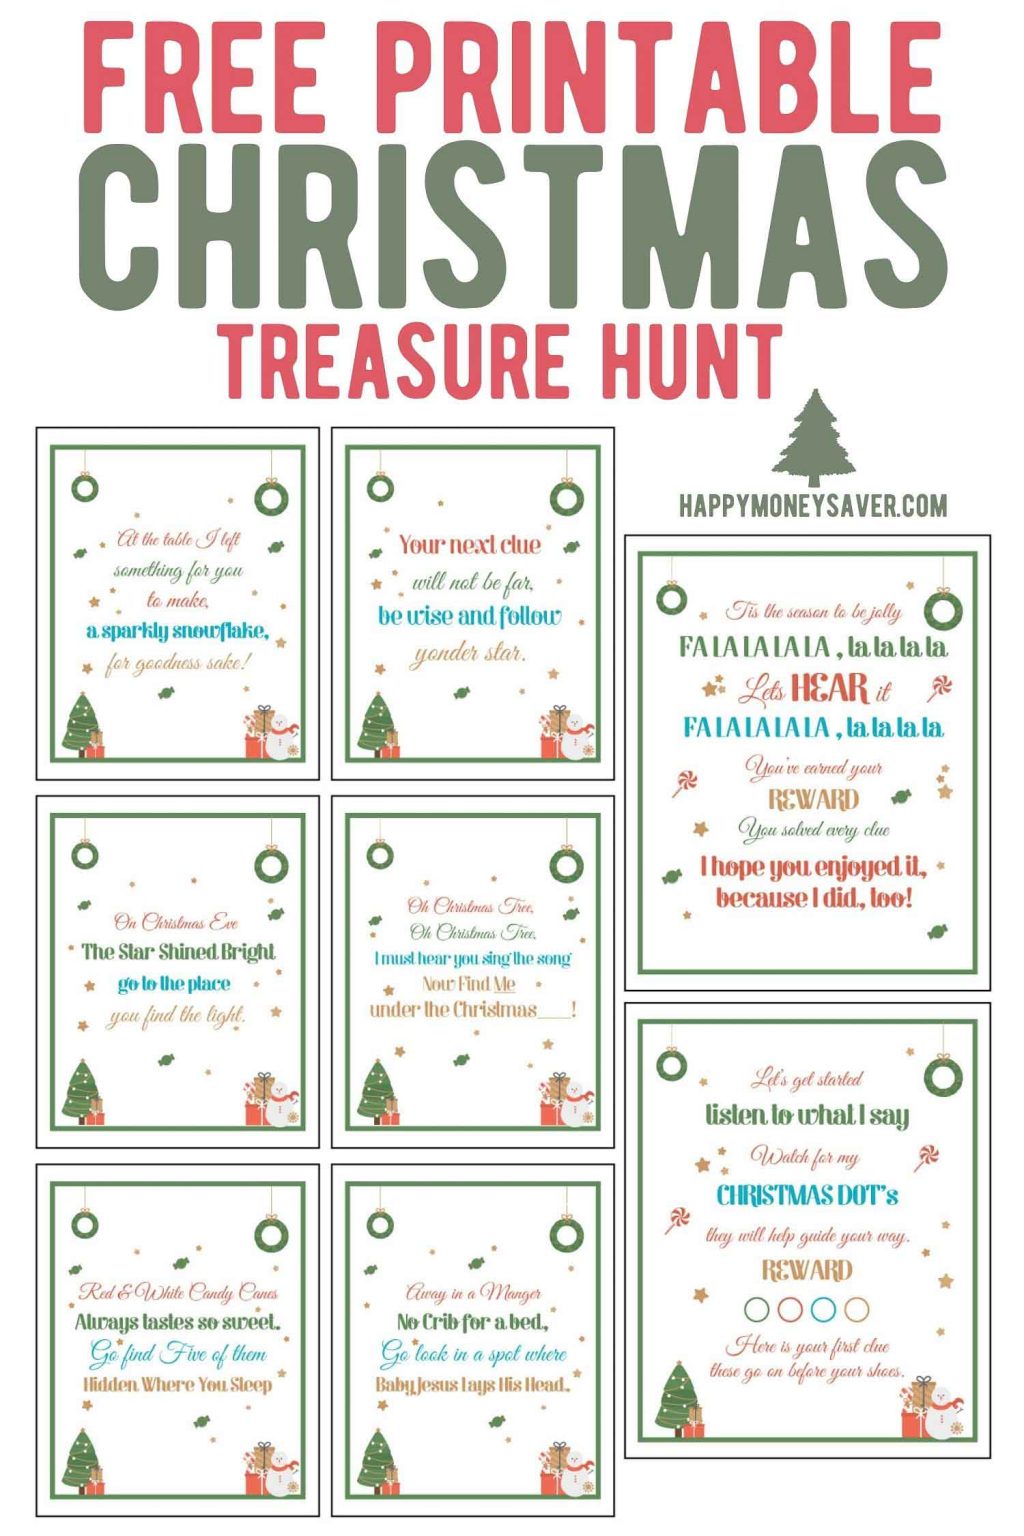 The Ultimate Christmas Treasure Hunt + free printable